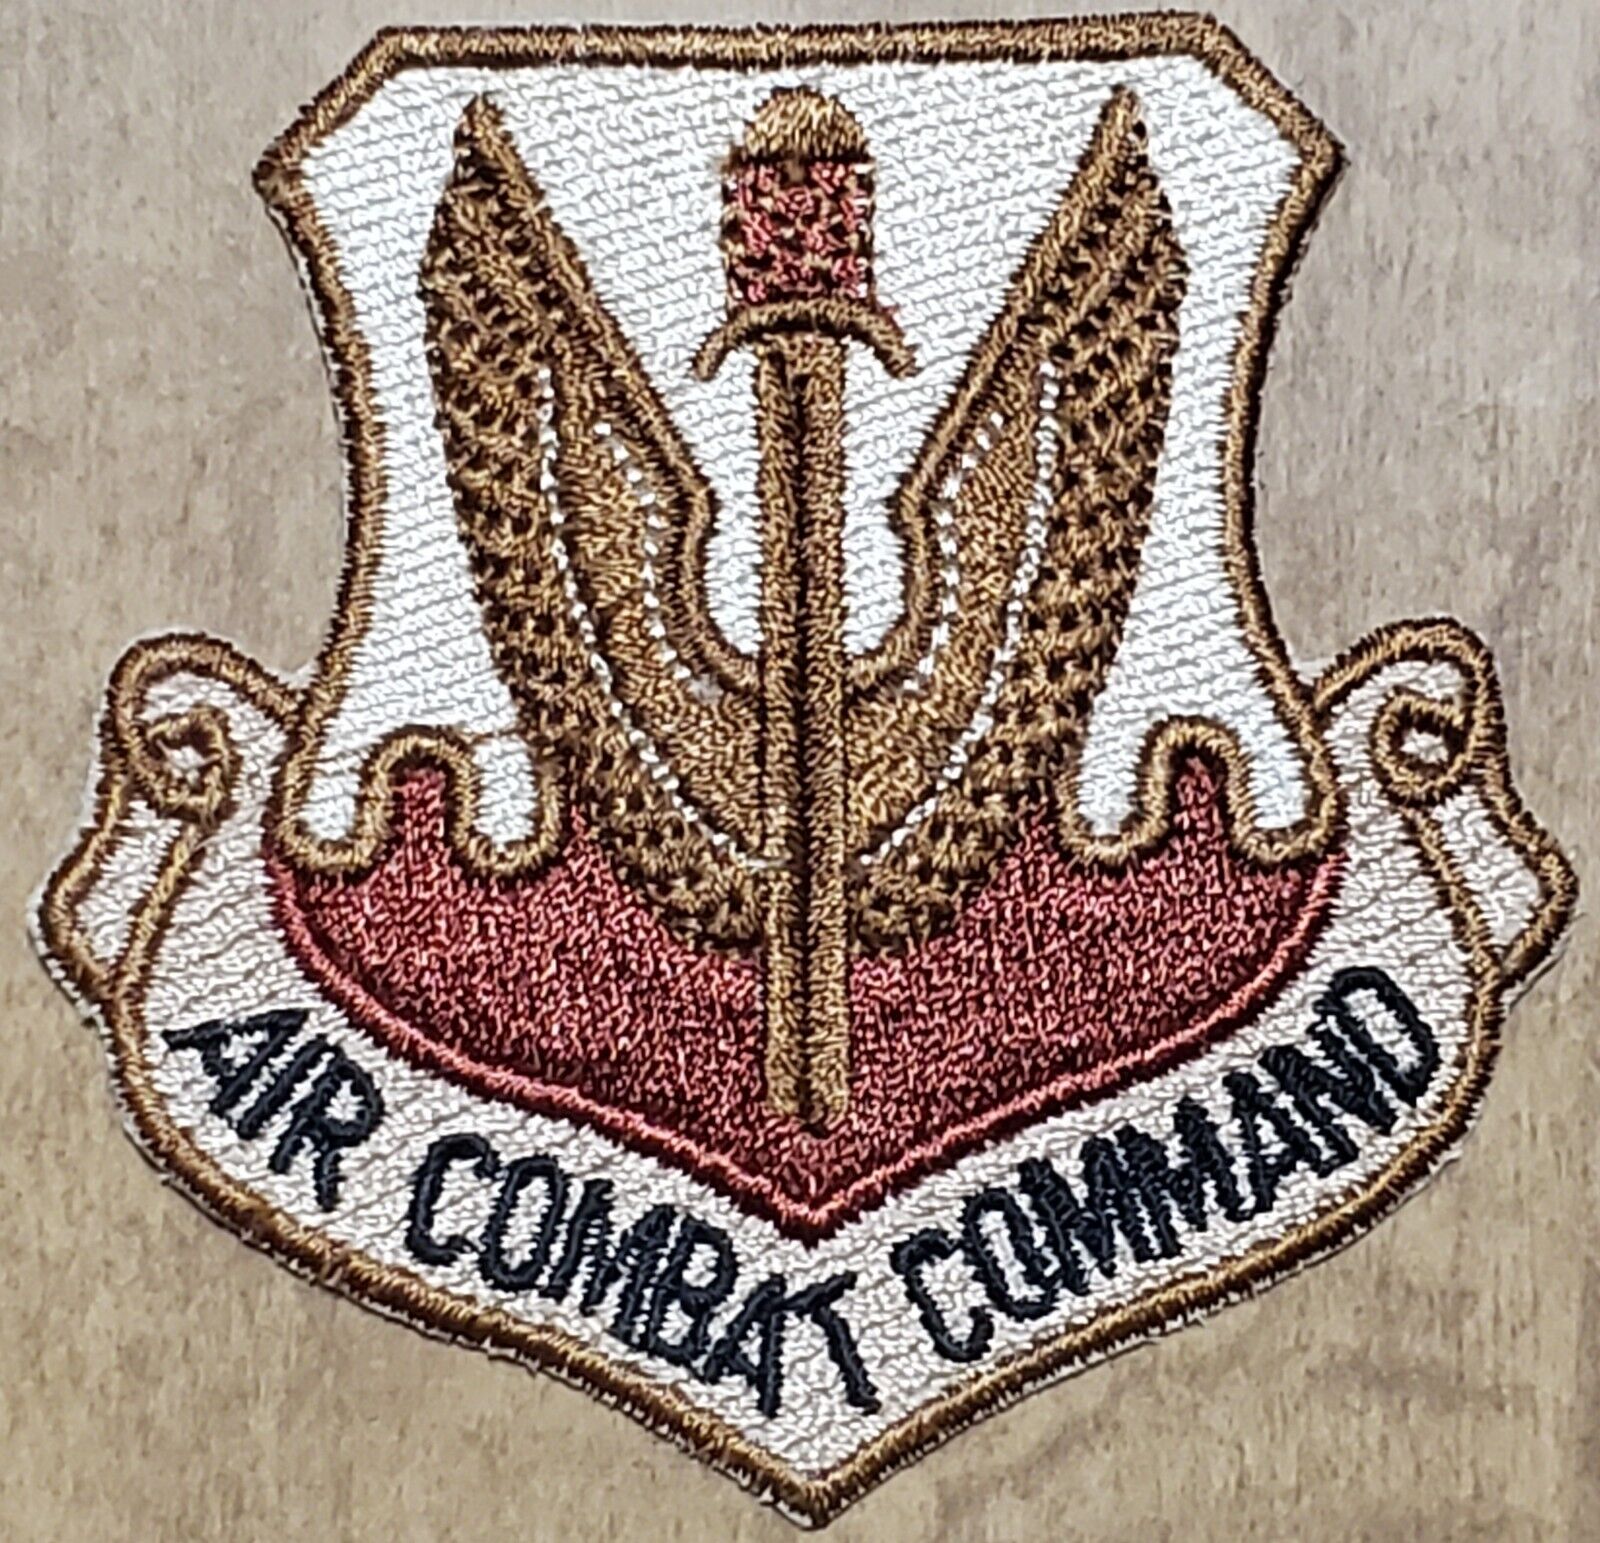 USAF AIR FORCE: AIR COMBAT COMMAND DESERT BDU PATCH VINTAGE ORIGINAL MILITARY